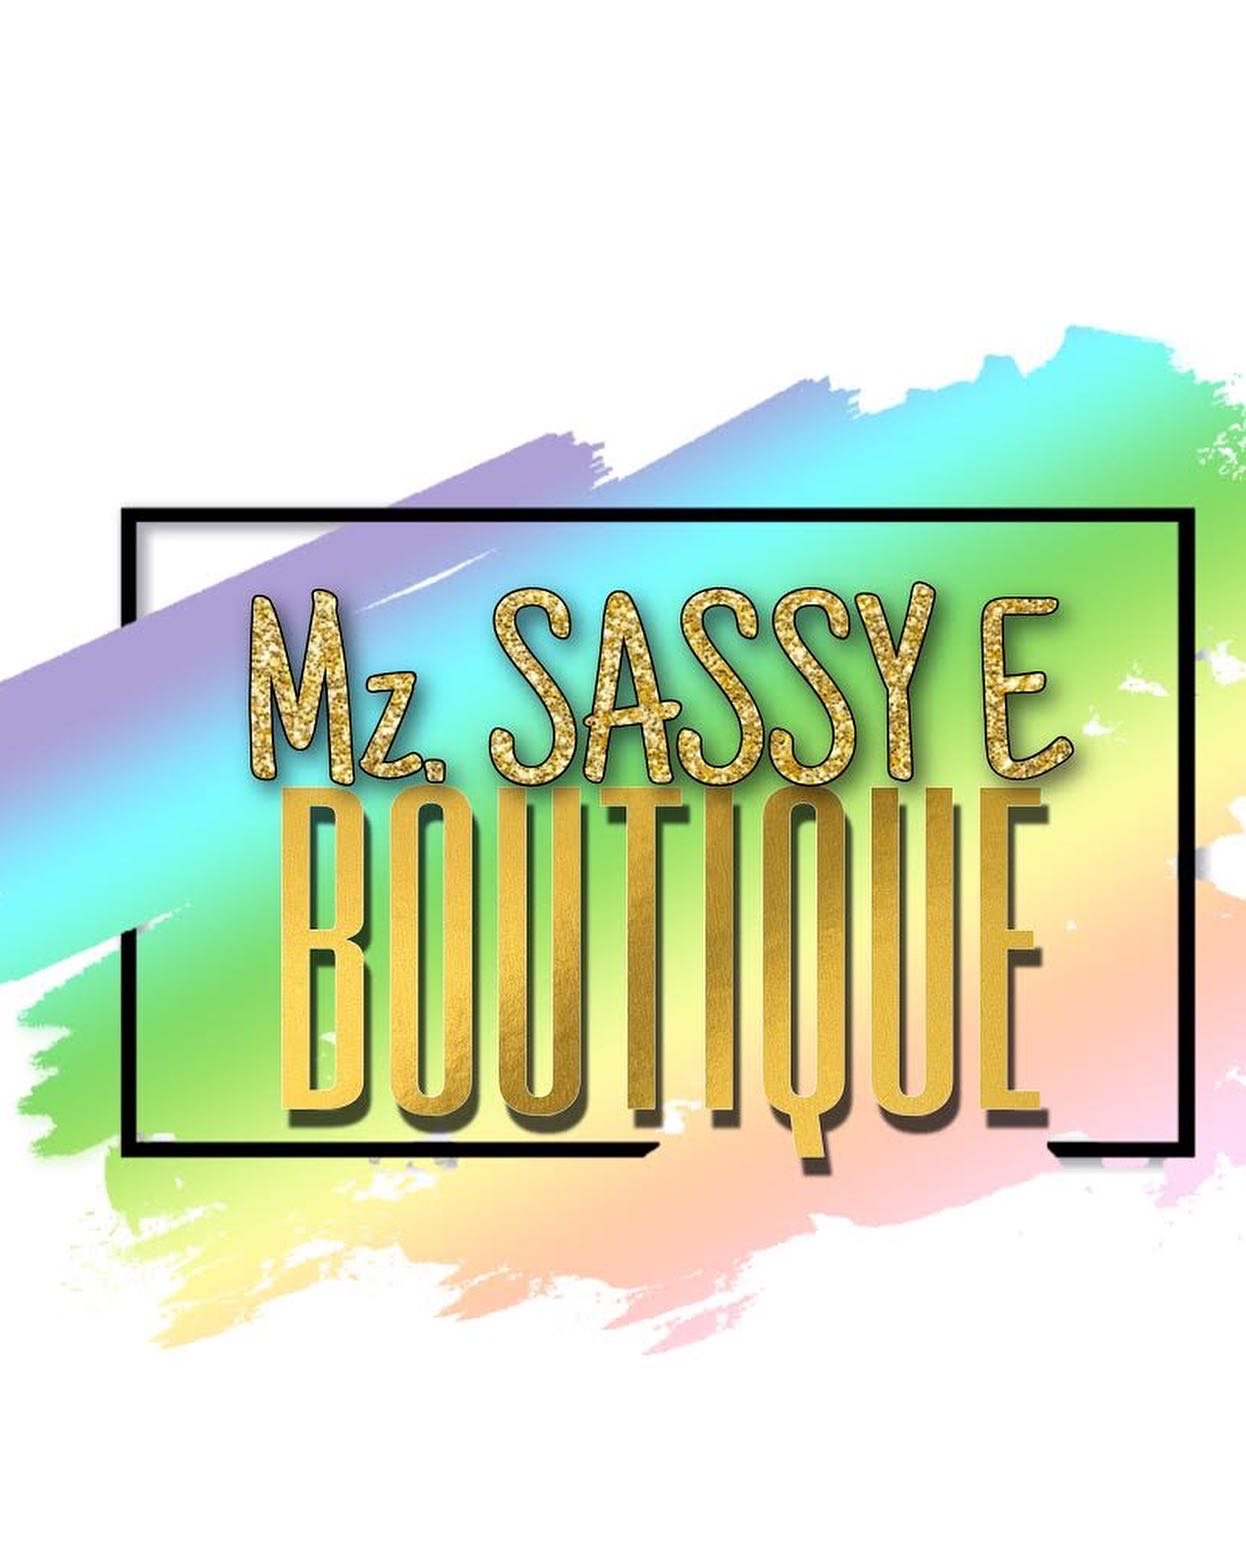 Mz. Sassy E Boutique